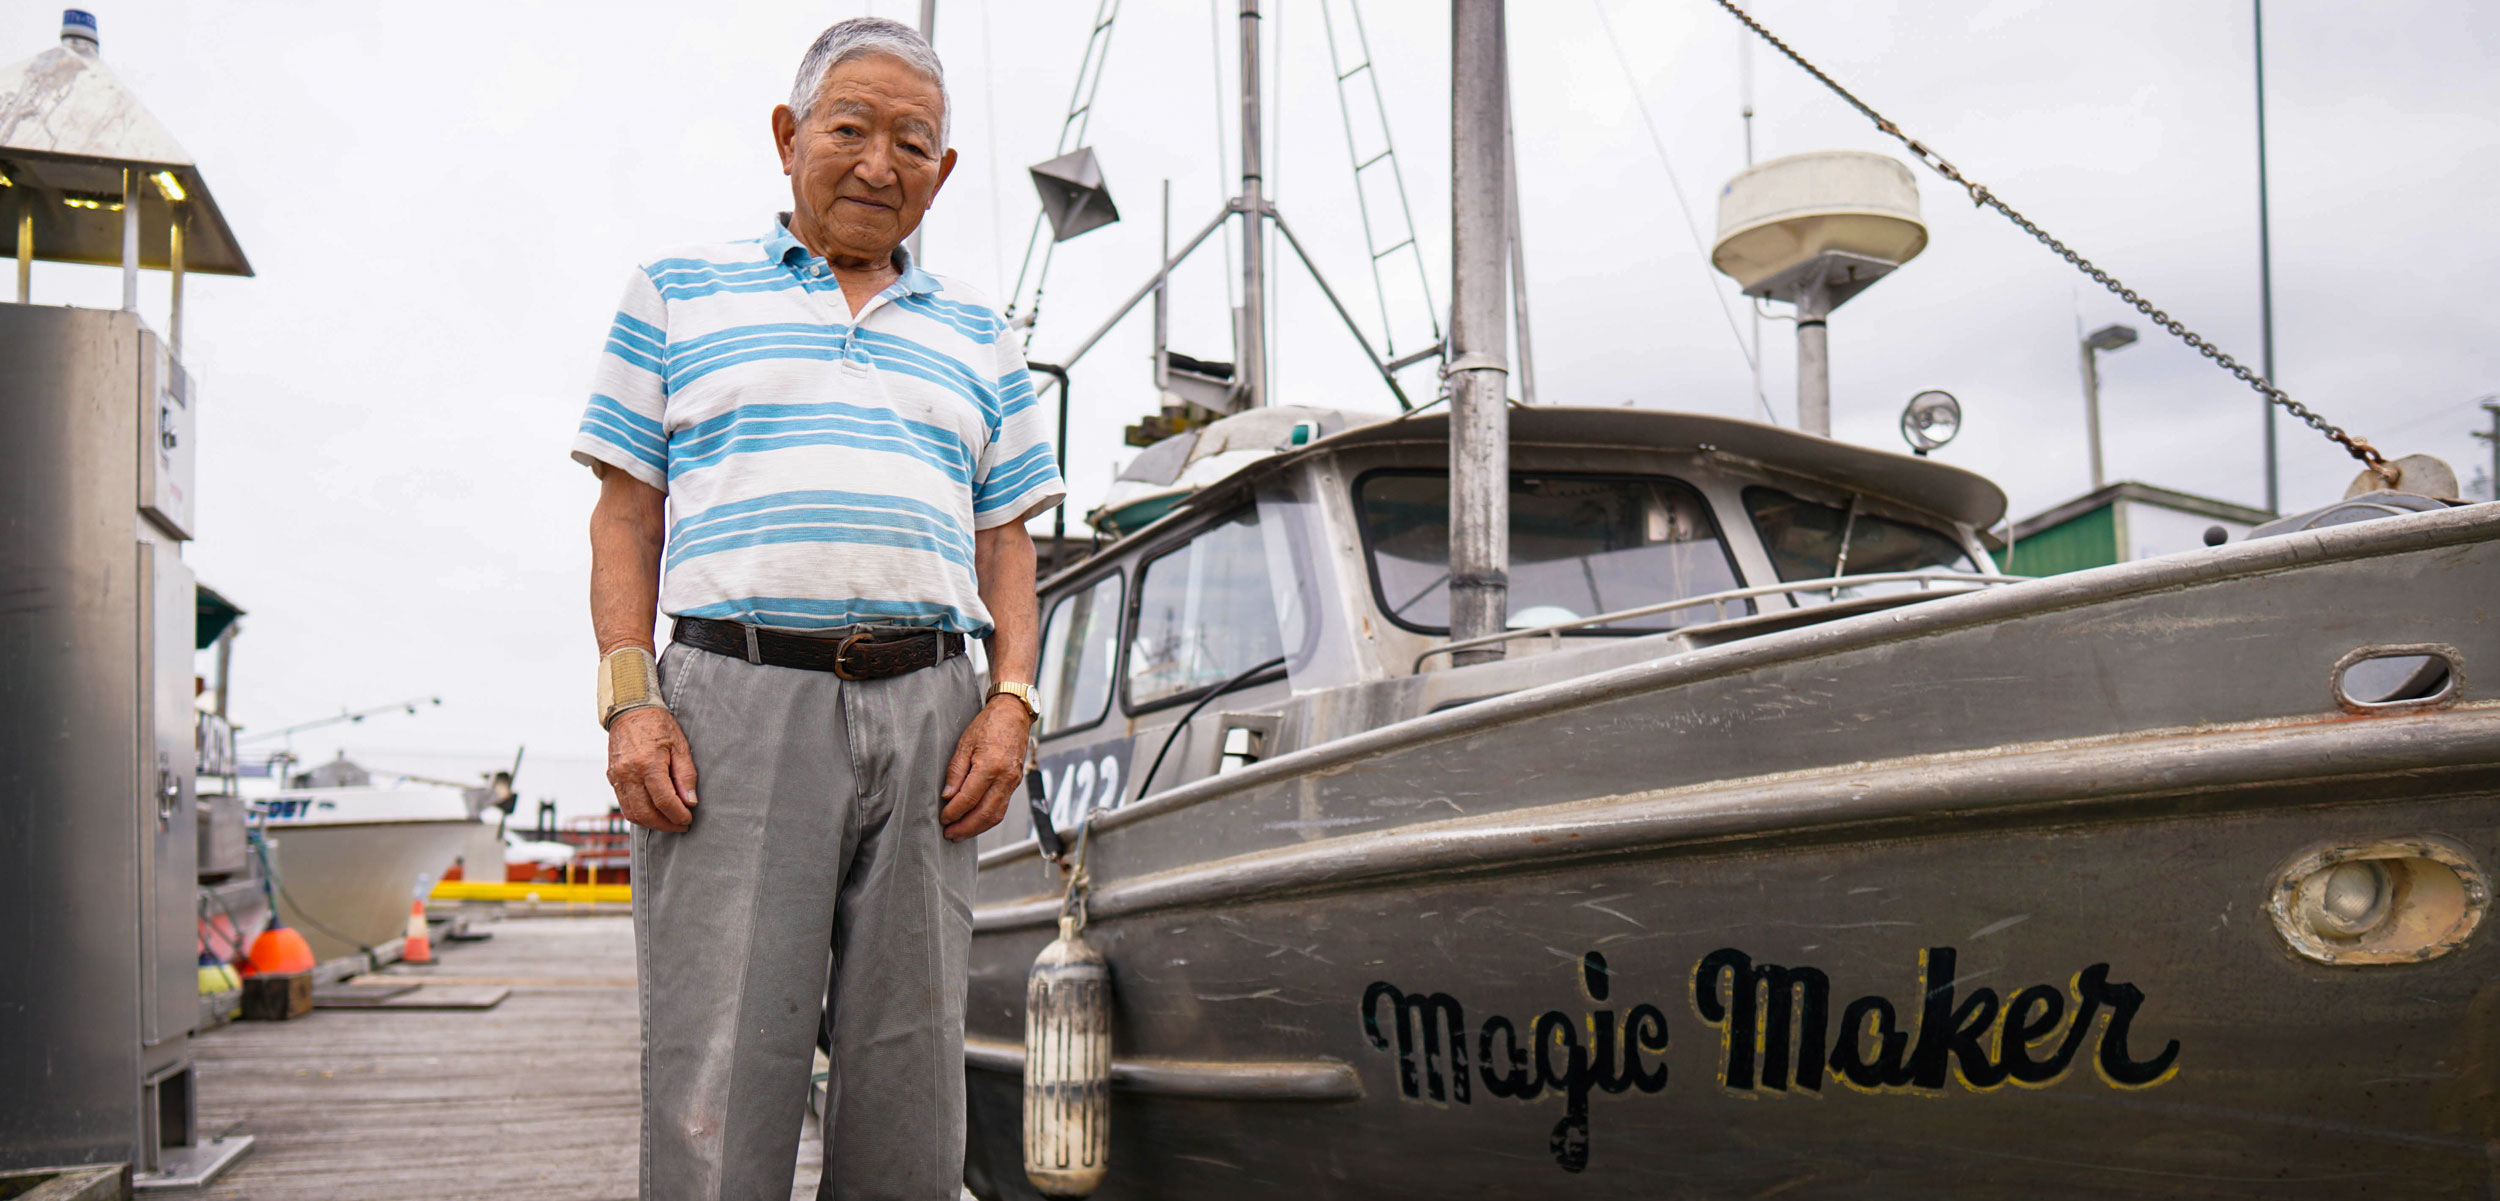 Satoshi “Sugar” Hamada next to his boat